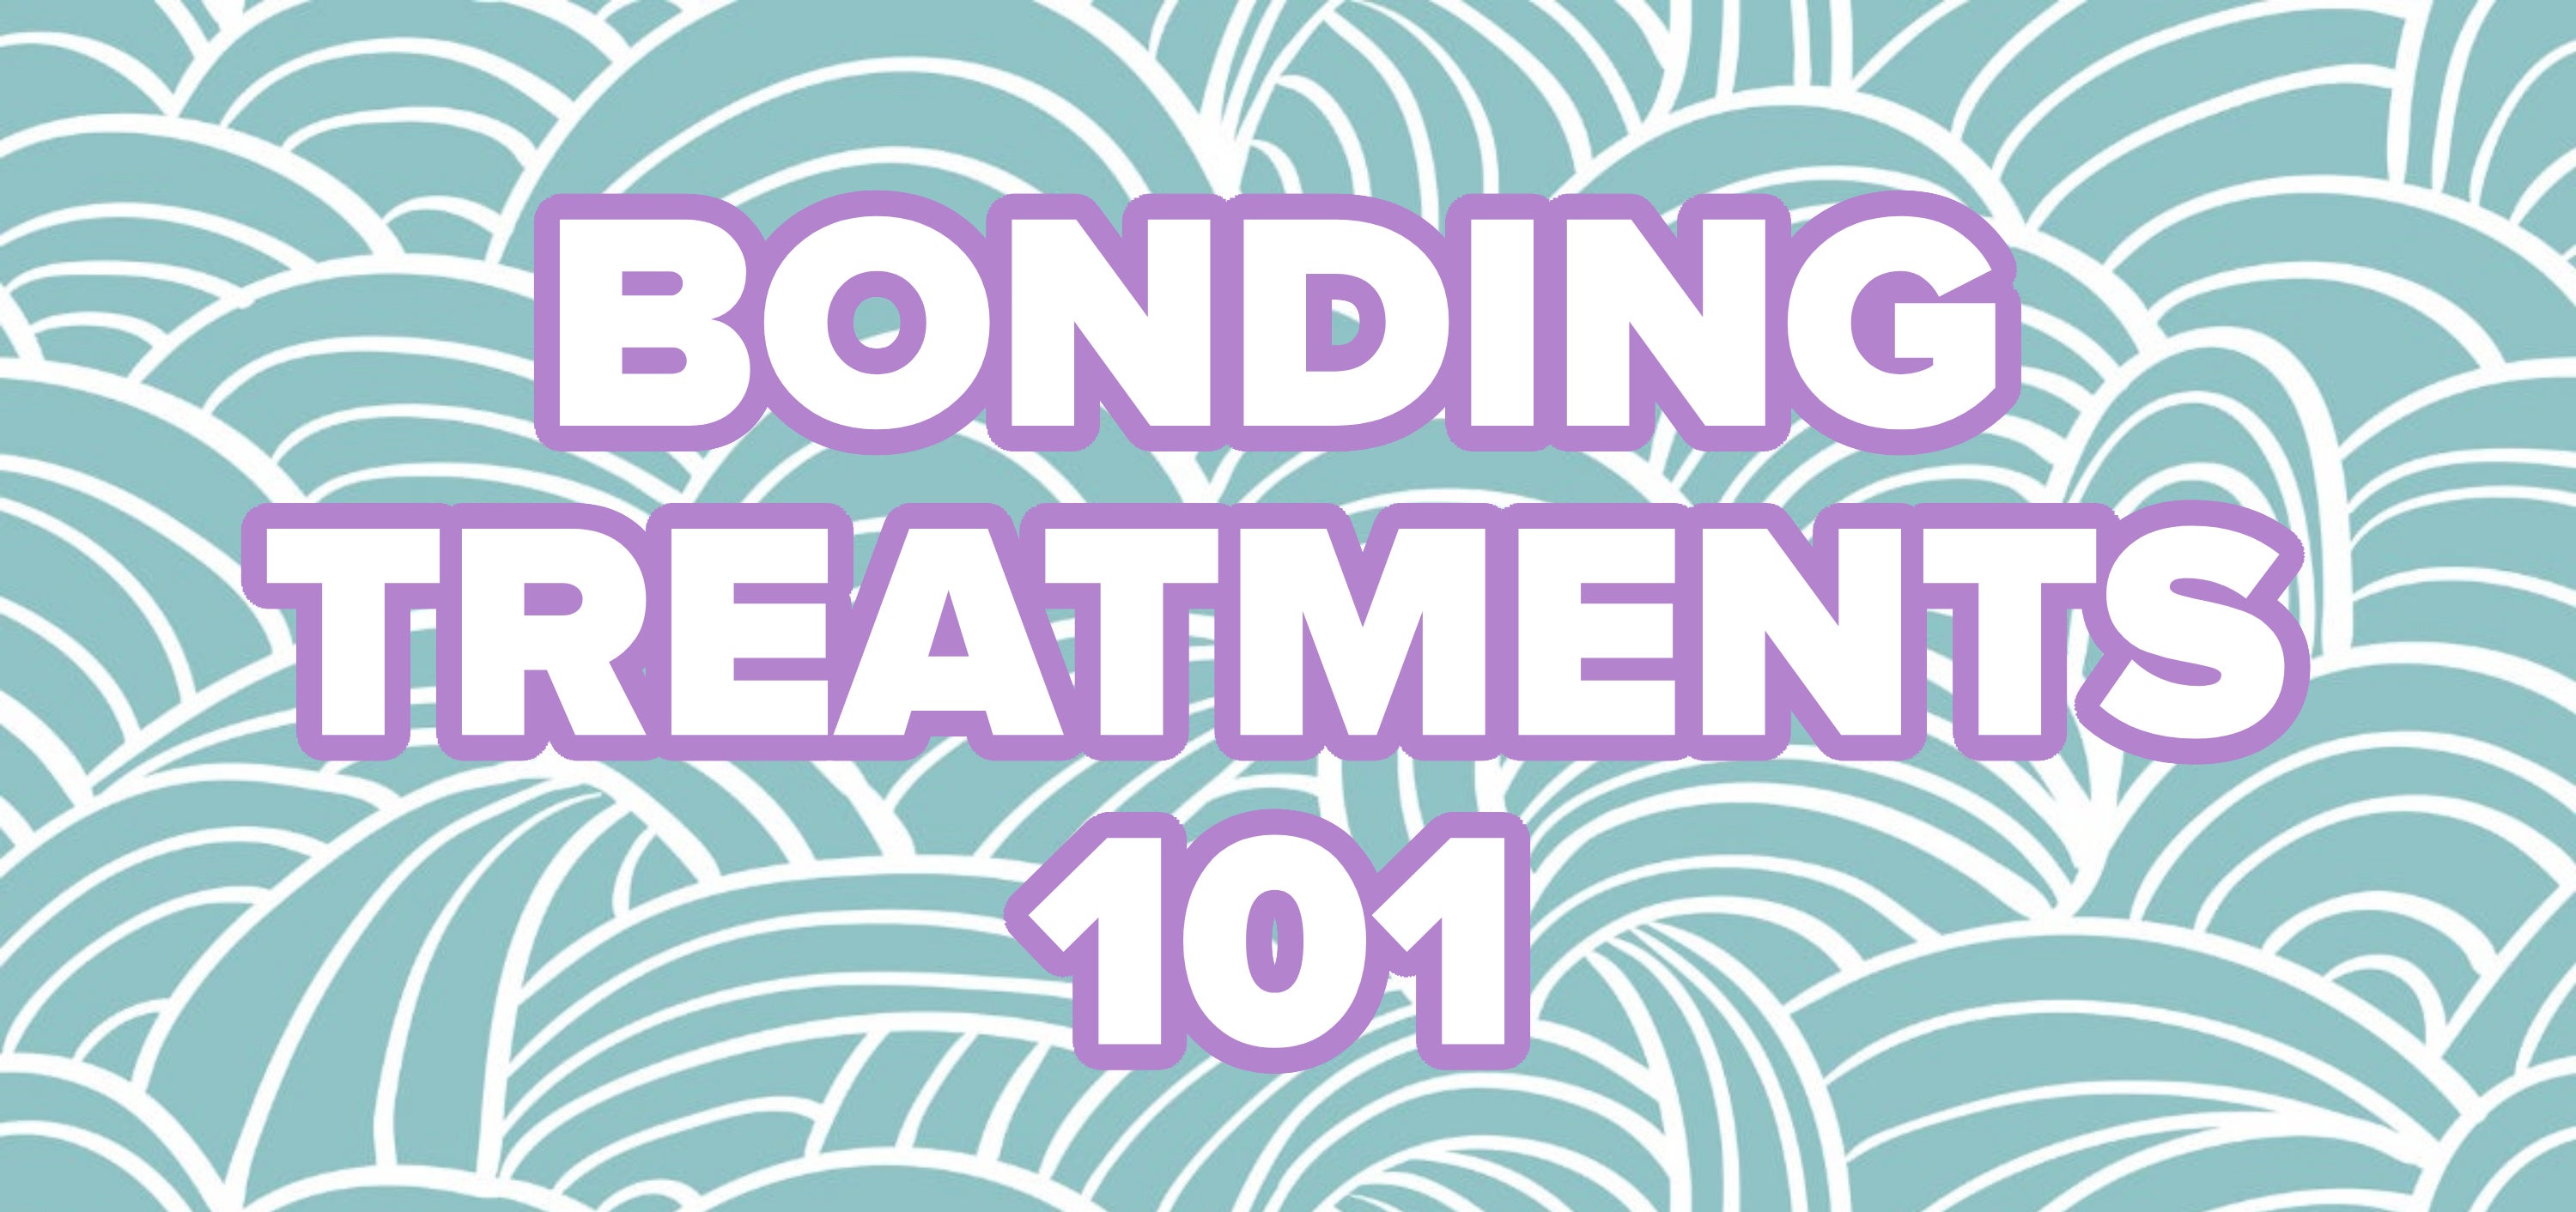 Text: &quot;Bonding Treatments 101&quot; over a decorative background